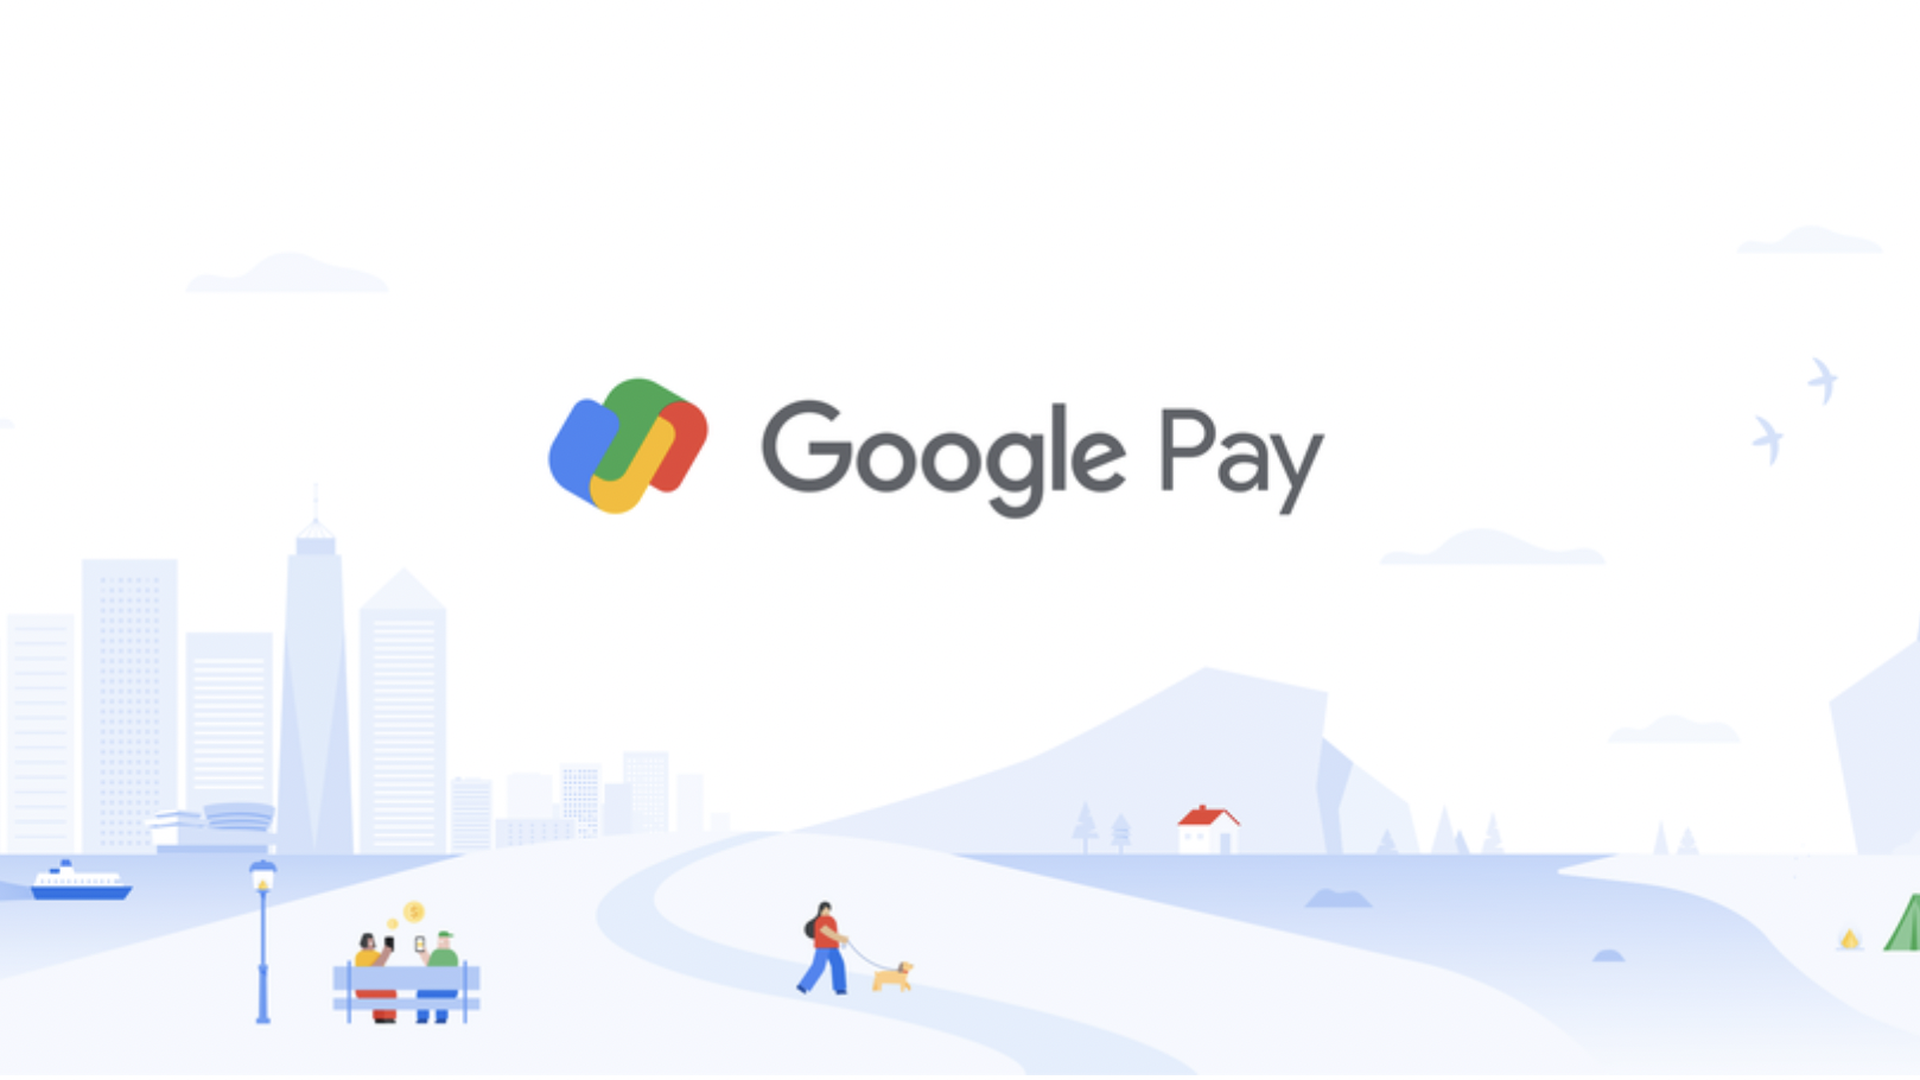 A Google Pay logo against a cityscape